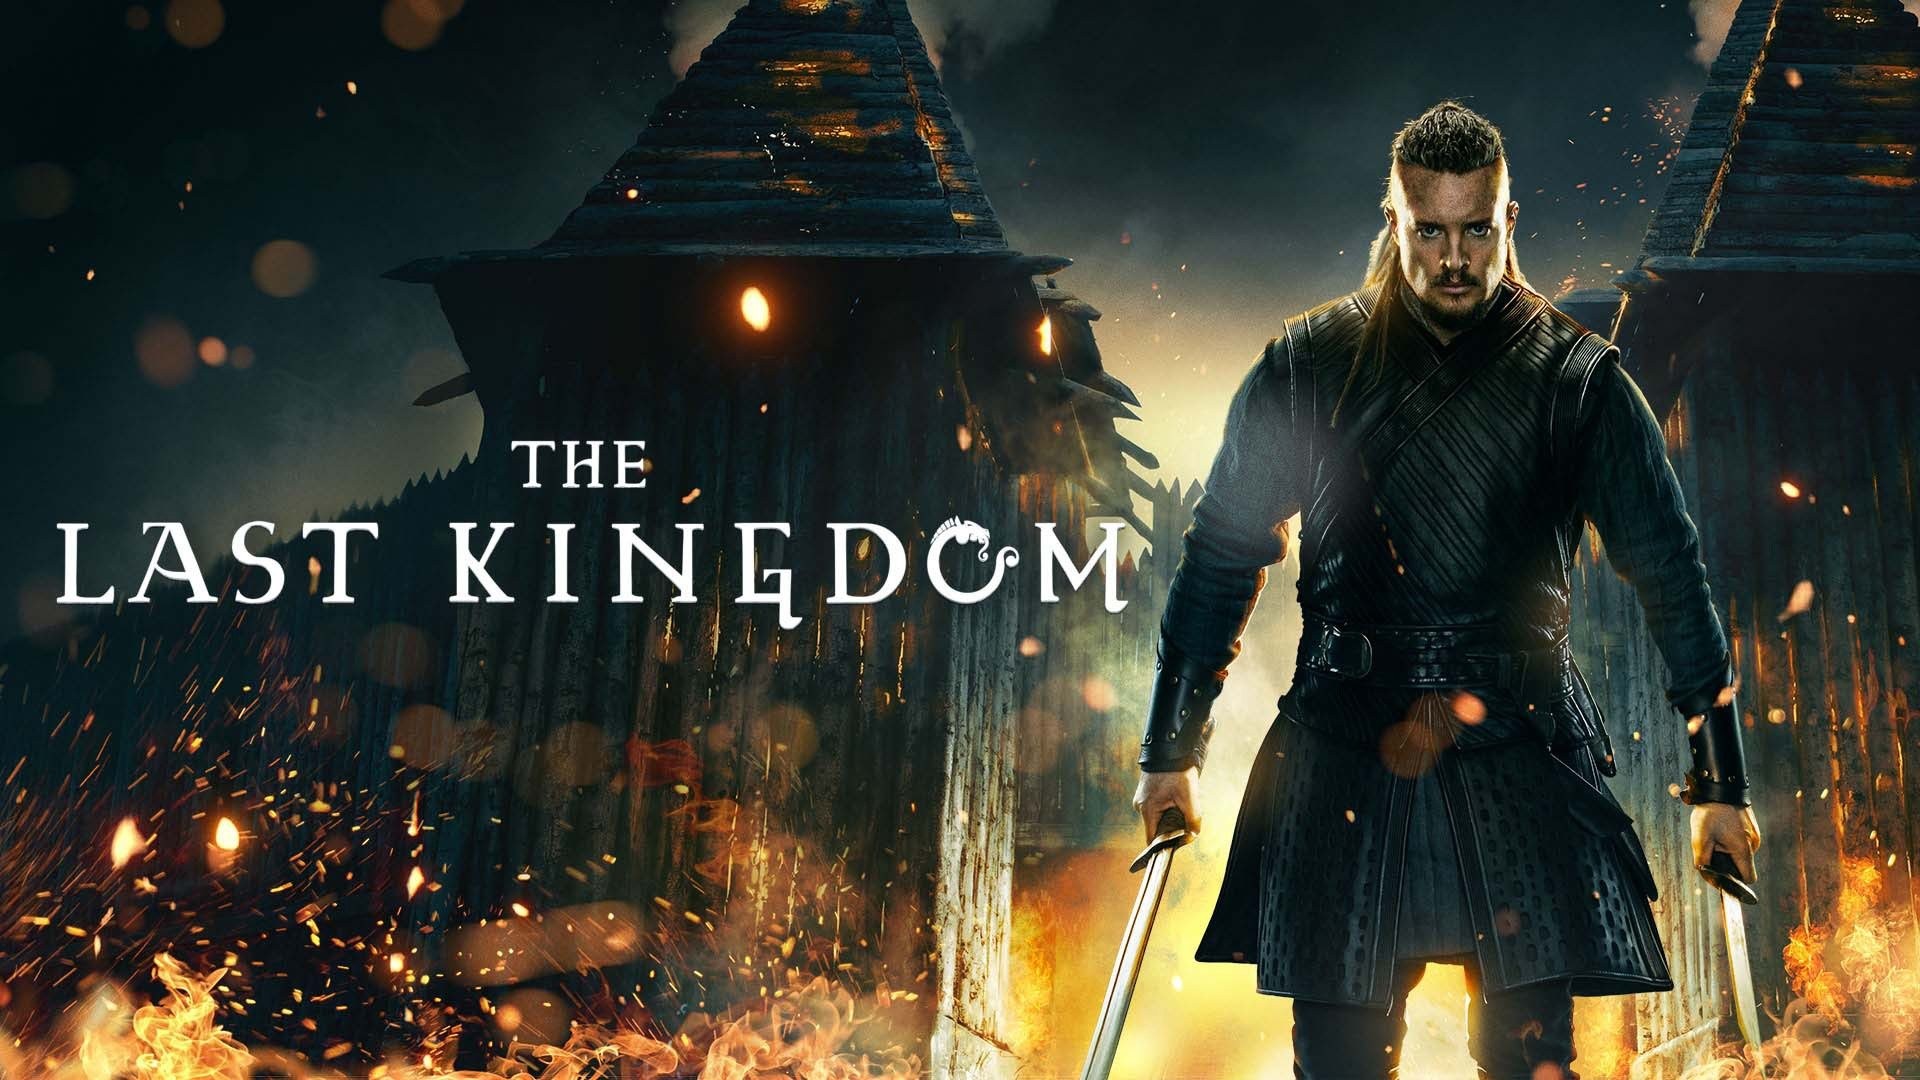 The Last Kingdom Season 5 - watch episodes streaming online